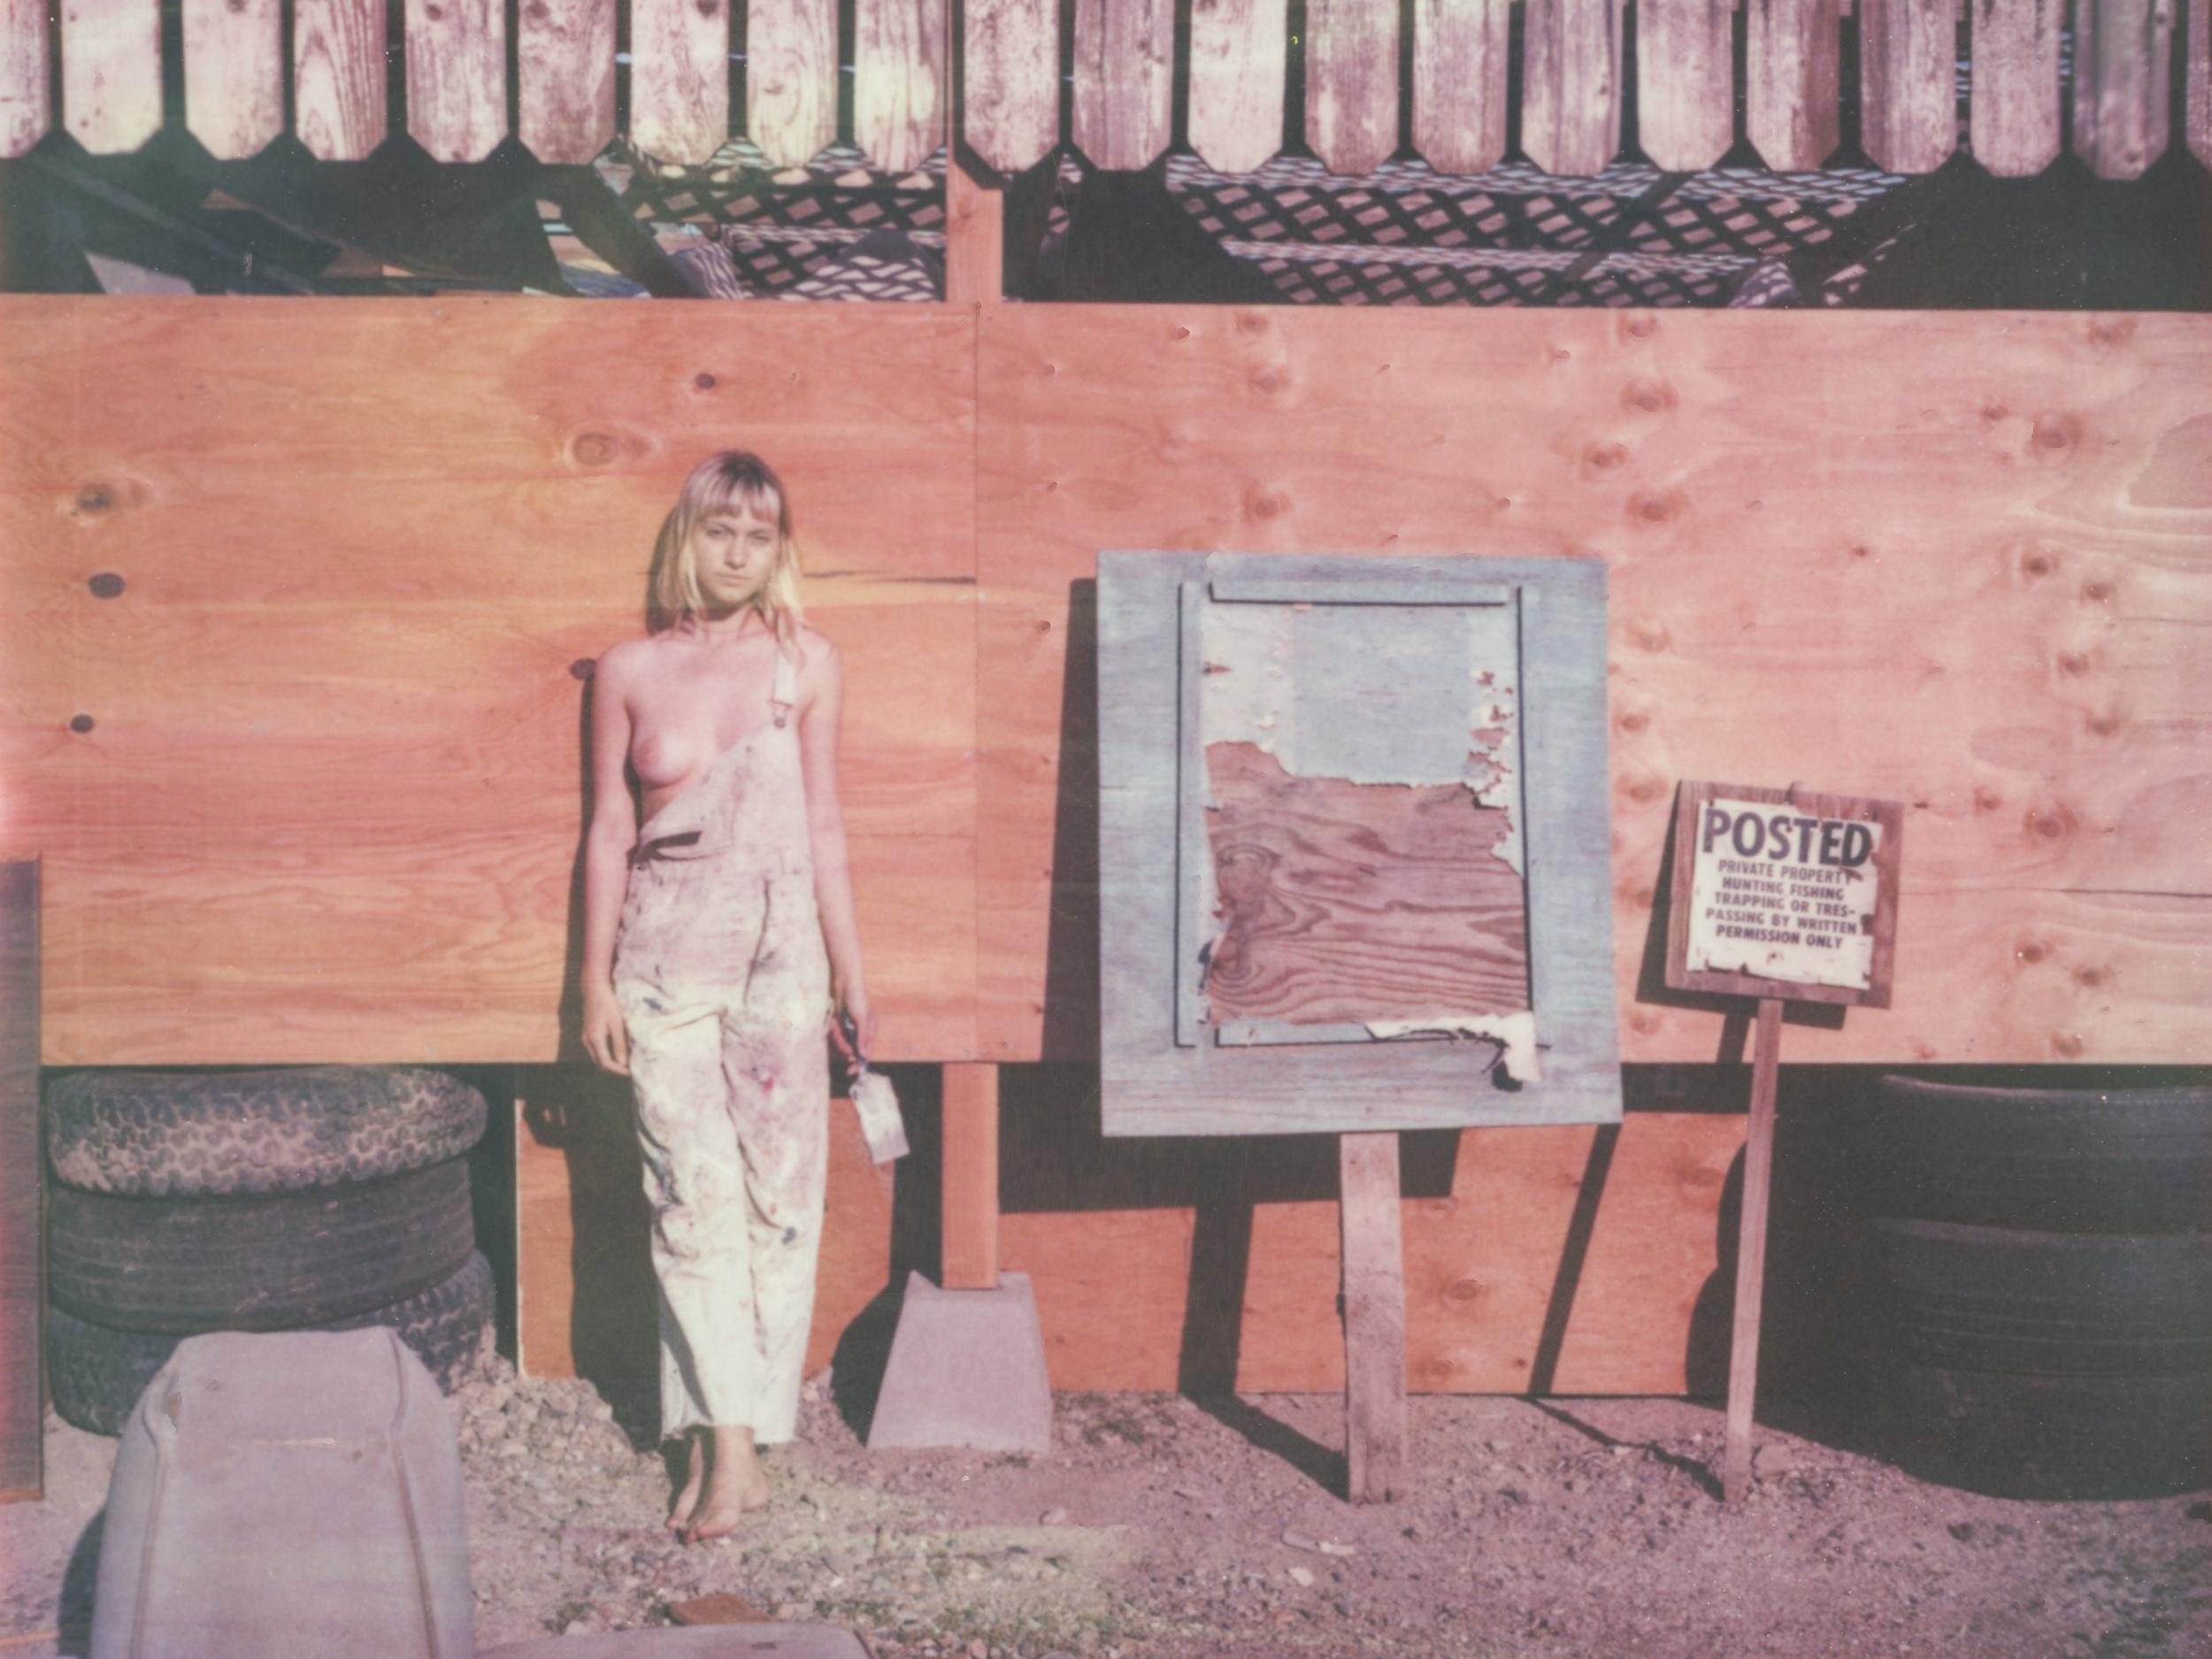 Kirsten Thys van den Audenaerde Nude Photograph - A Portrait of the Artist as a young Woman - Contemporary, Polaroid, Nude, Color